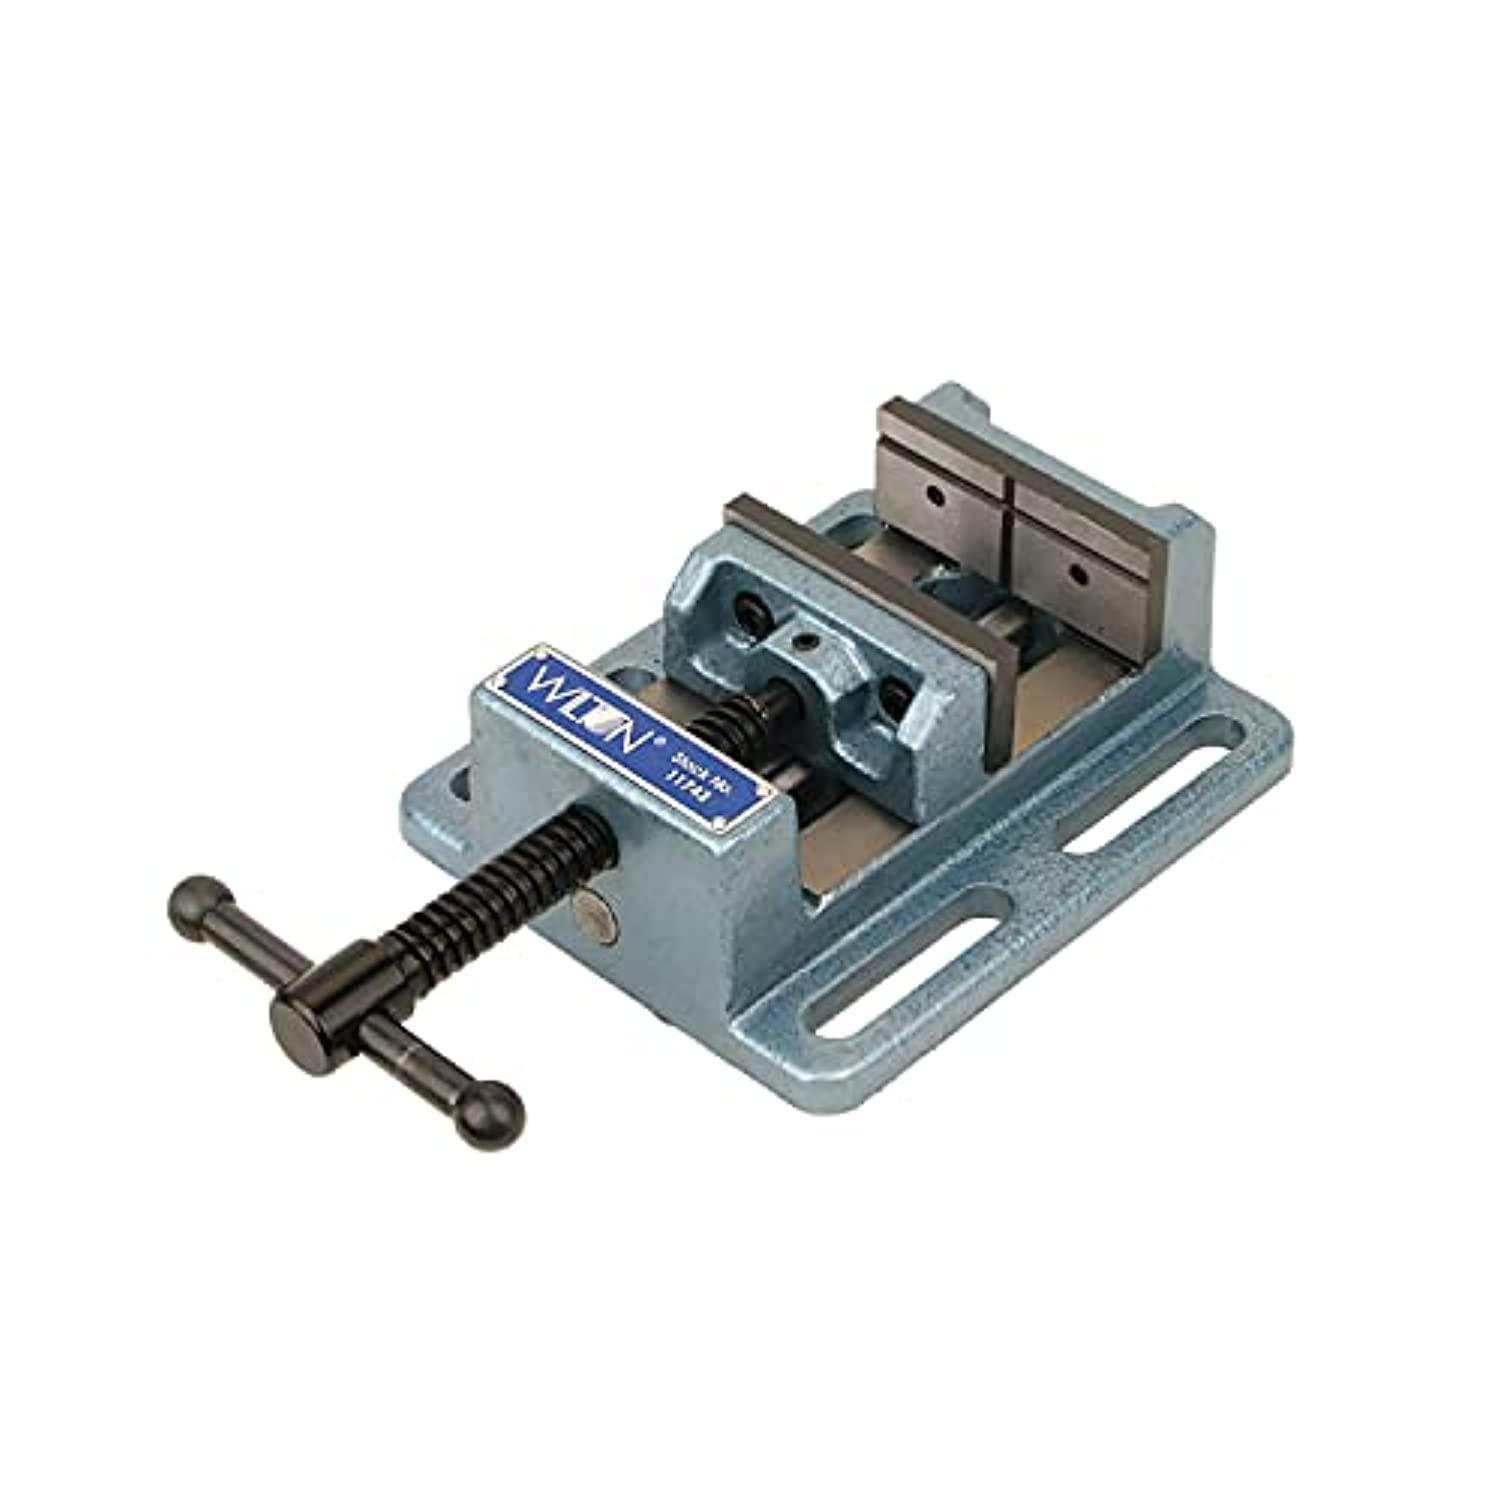 Wilton Tools wilton 11748 8-inch low profile drill press vise